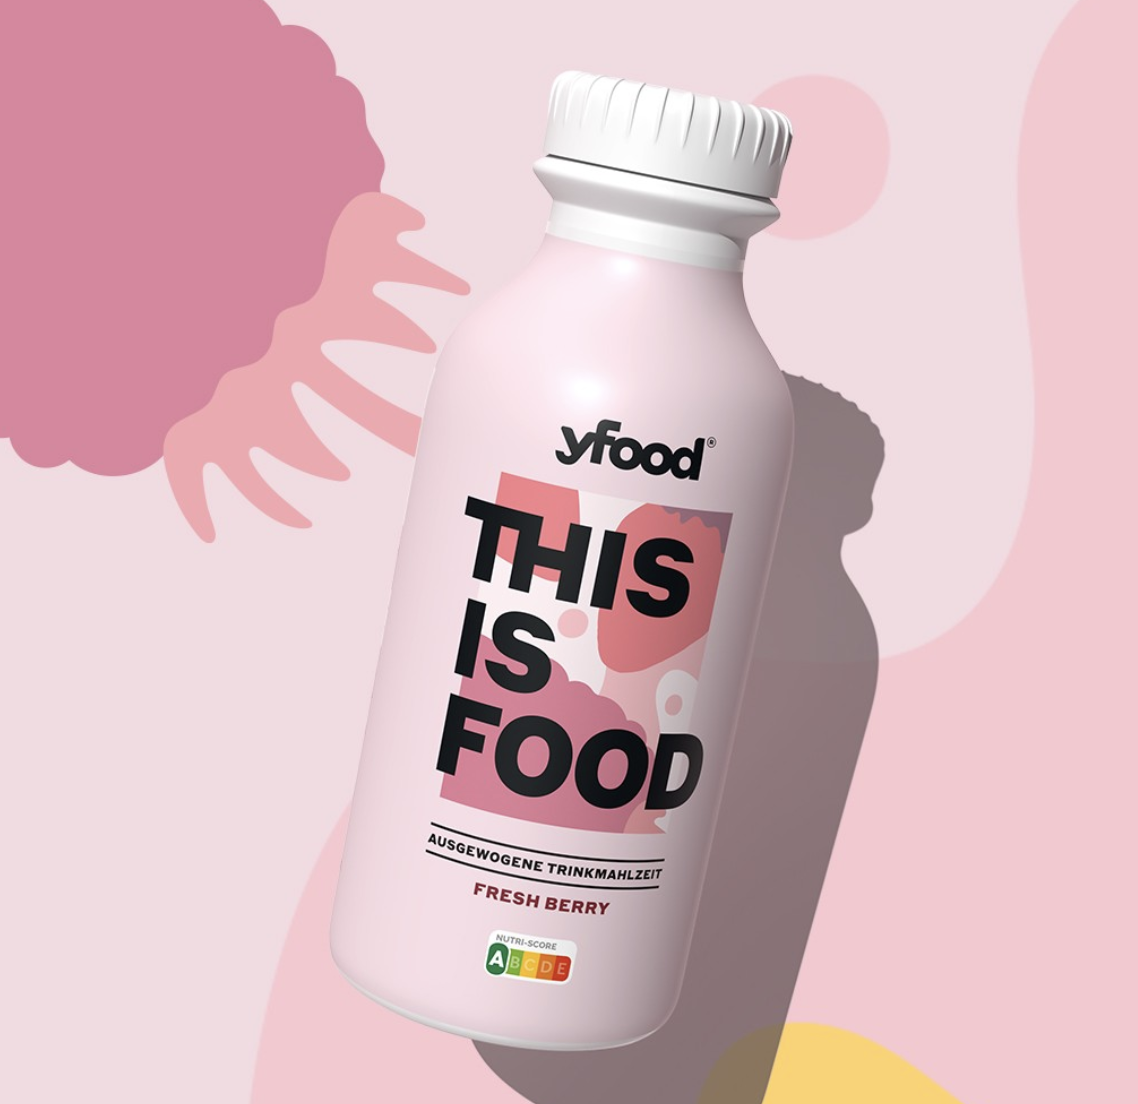 yFood – This is Food